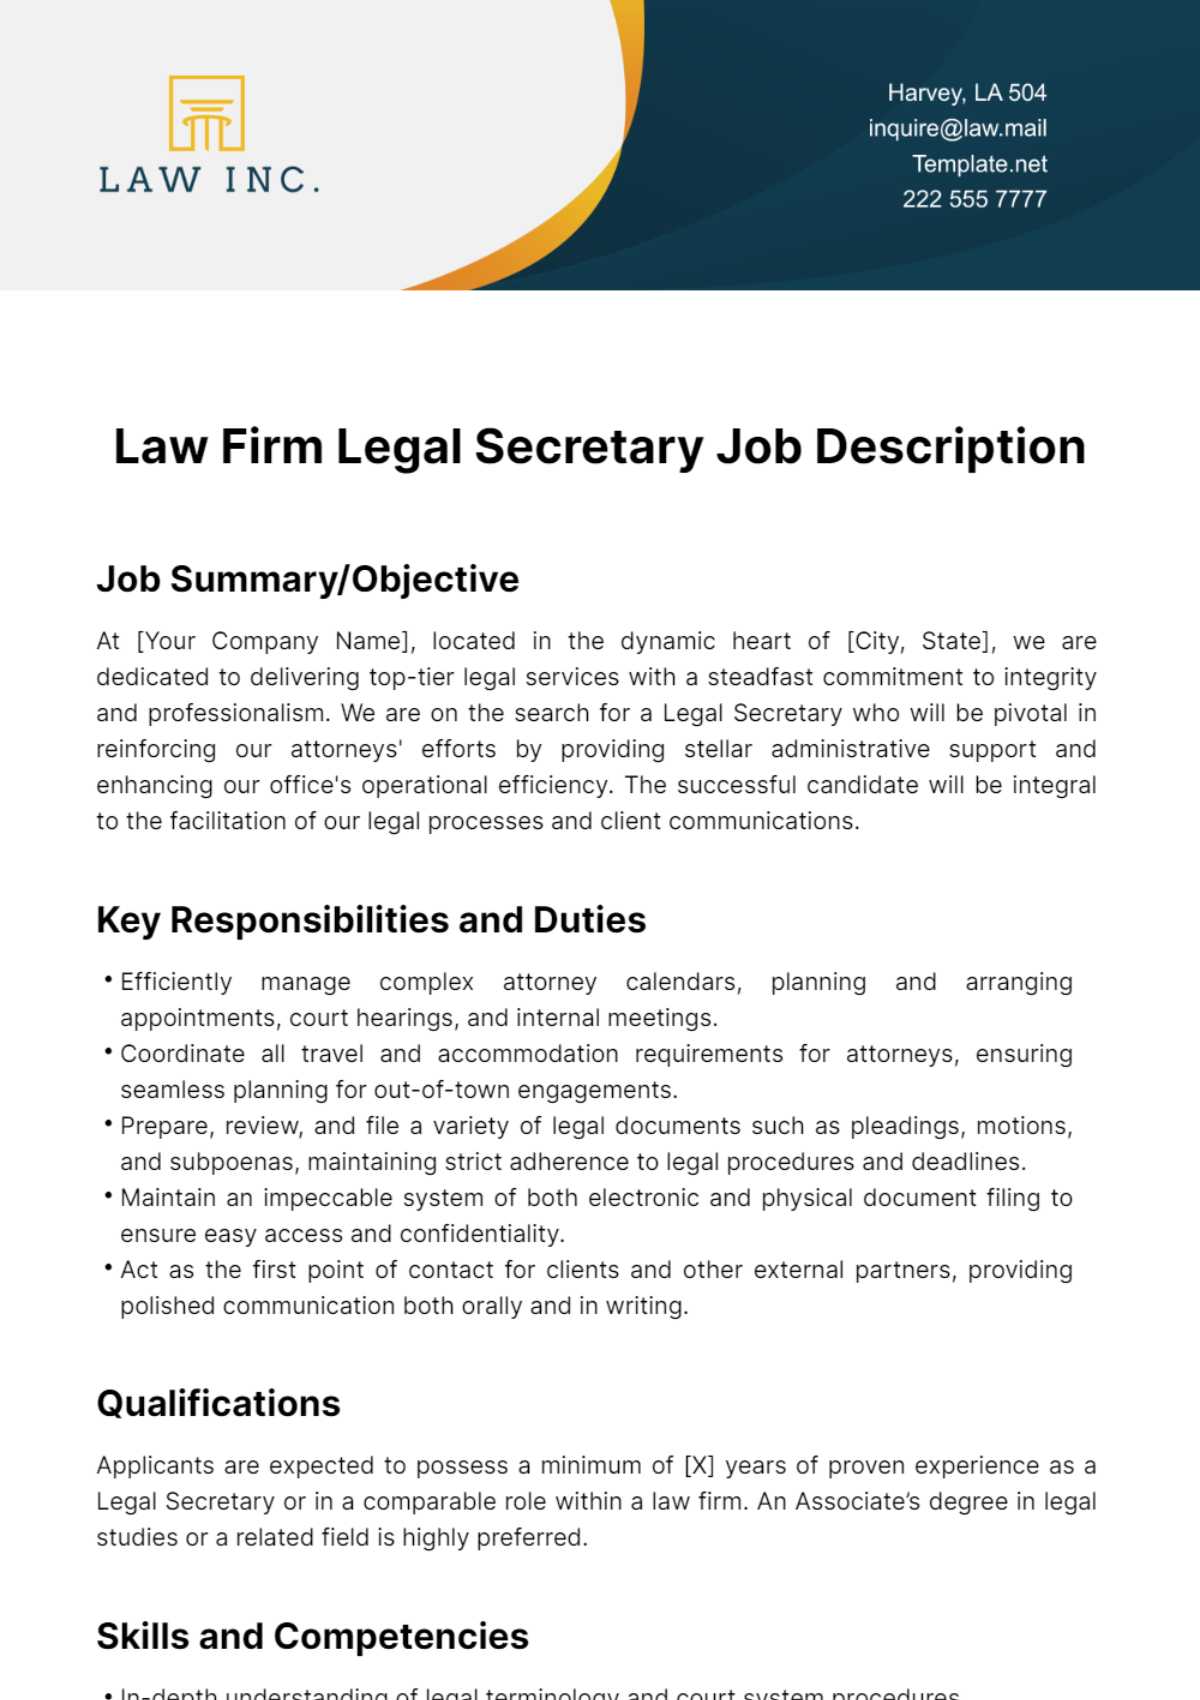 Law Firm Legal Secretary Job Description Template